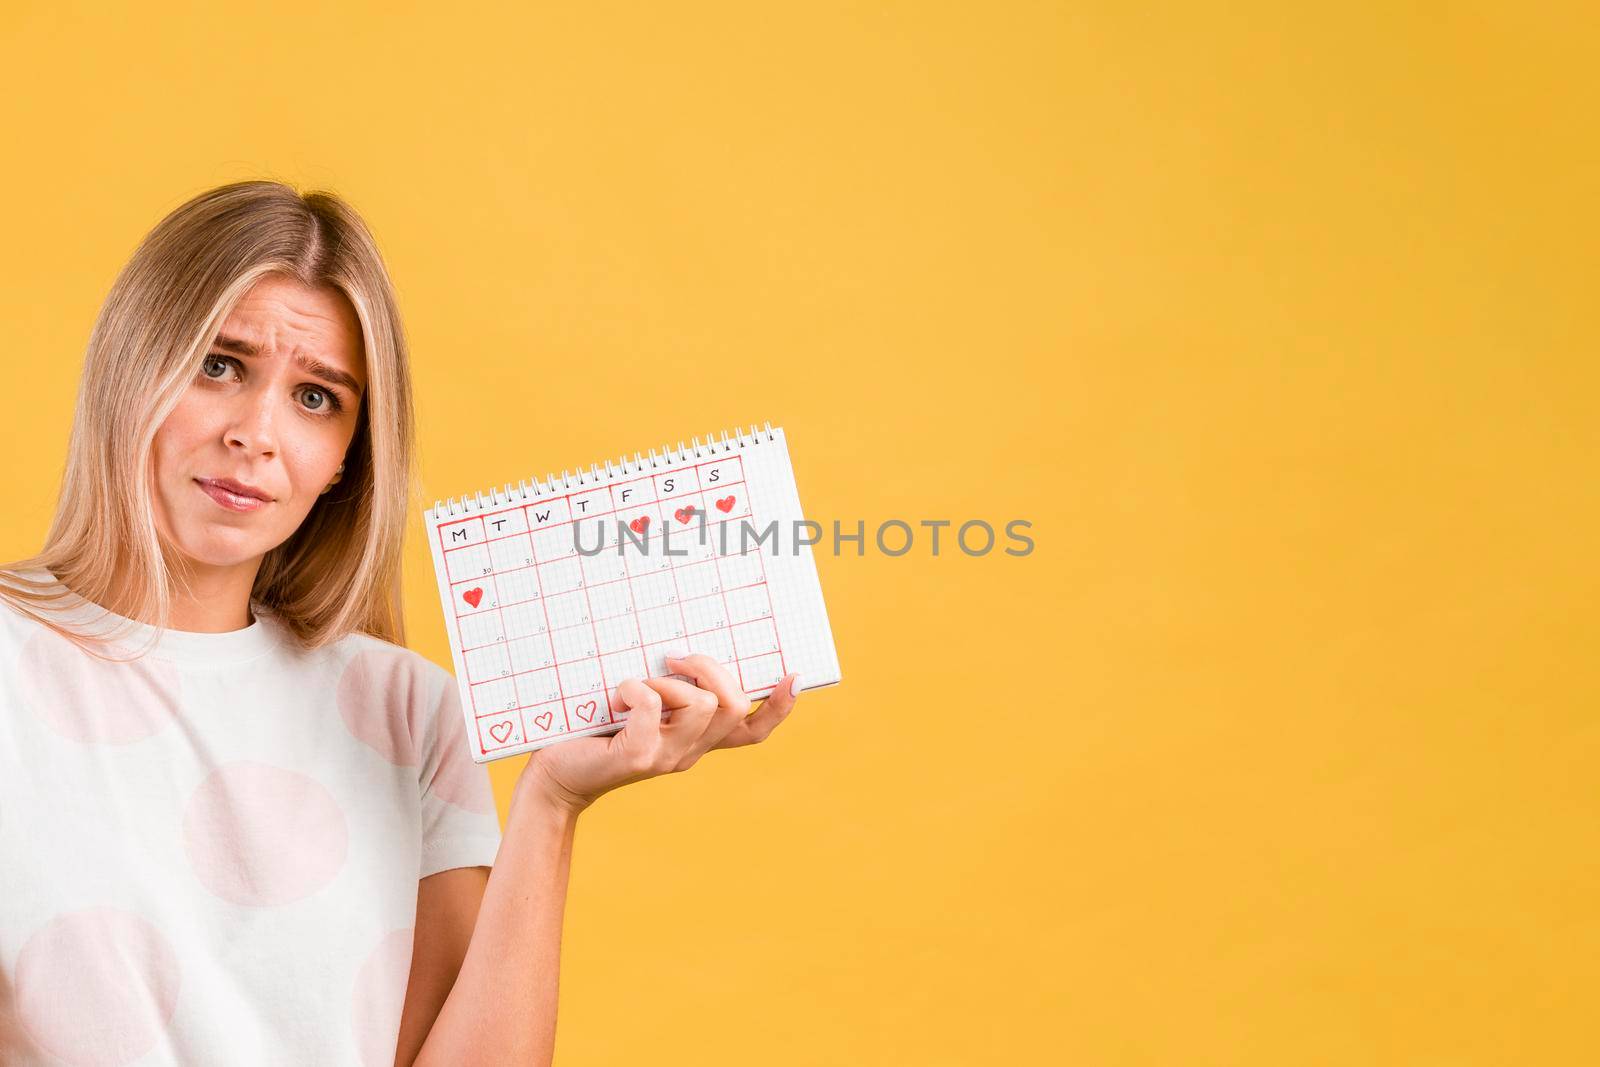 woman being upset holding period calendar